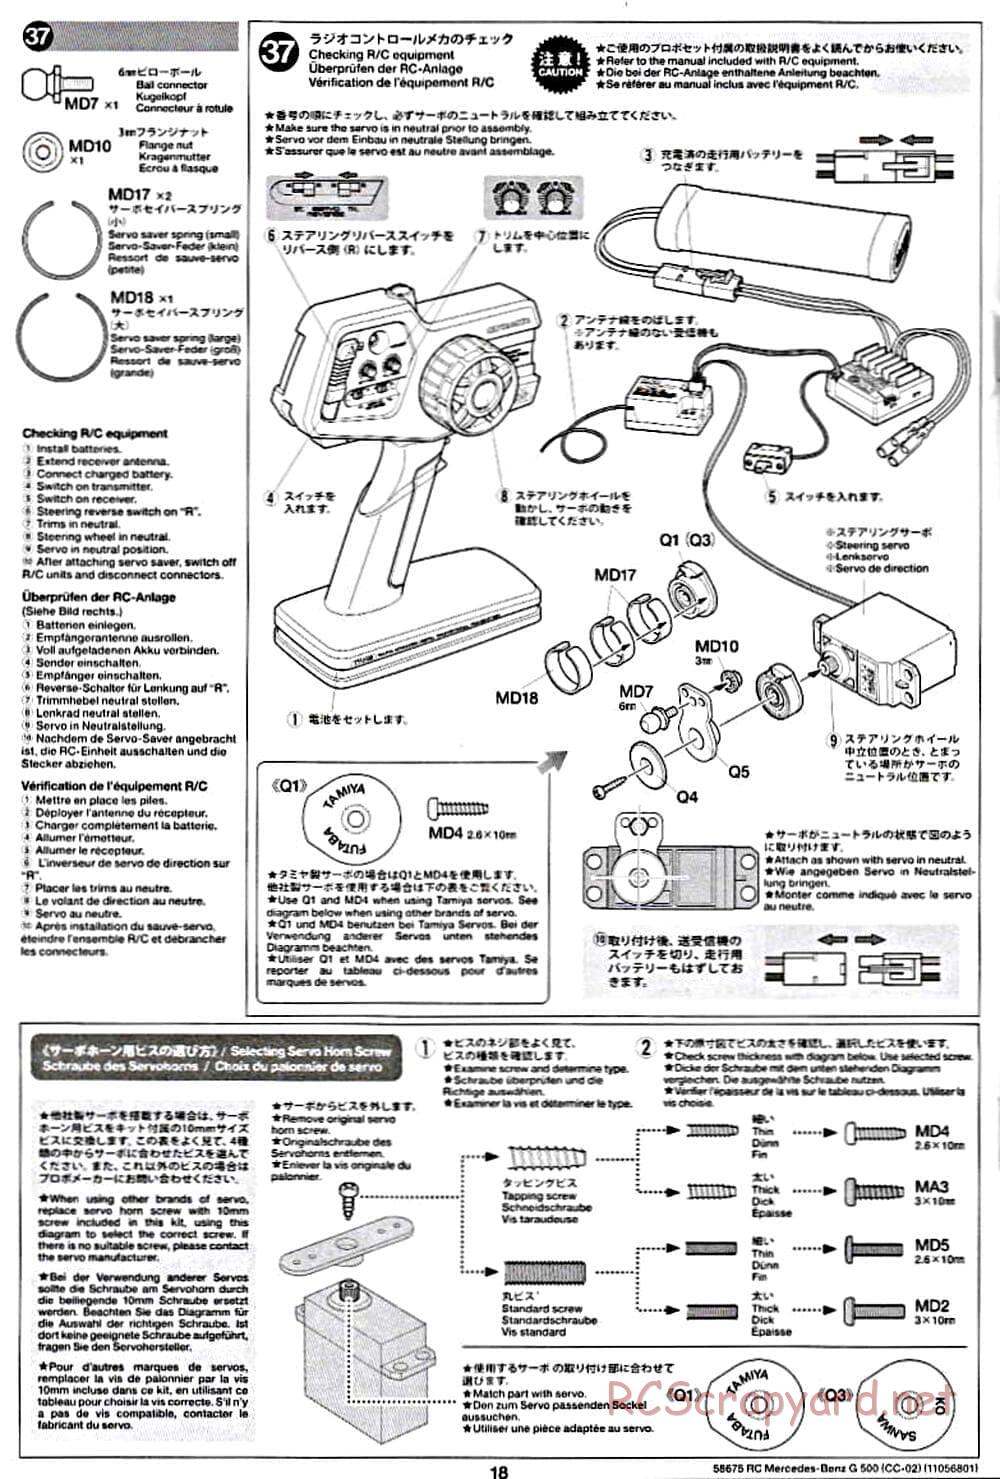 Tamiya - Mercedes-Benz G500 - CC-02 Chassis - Manual - Page 18